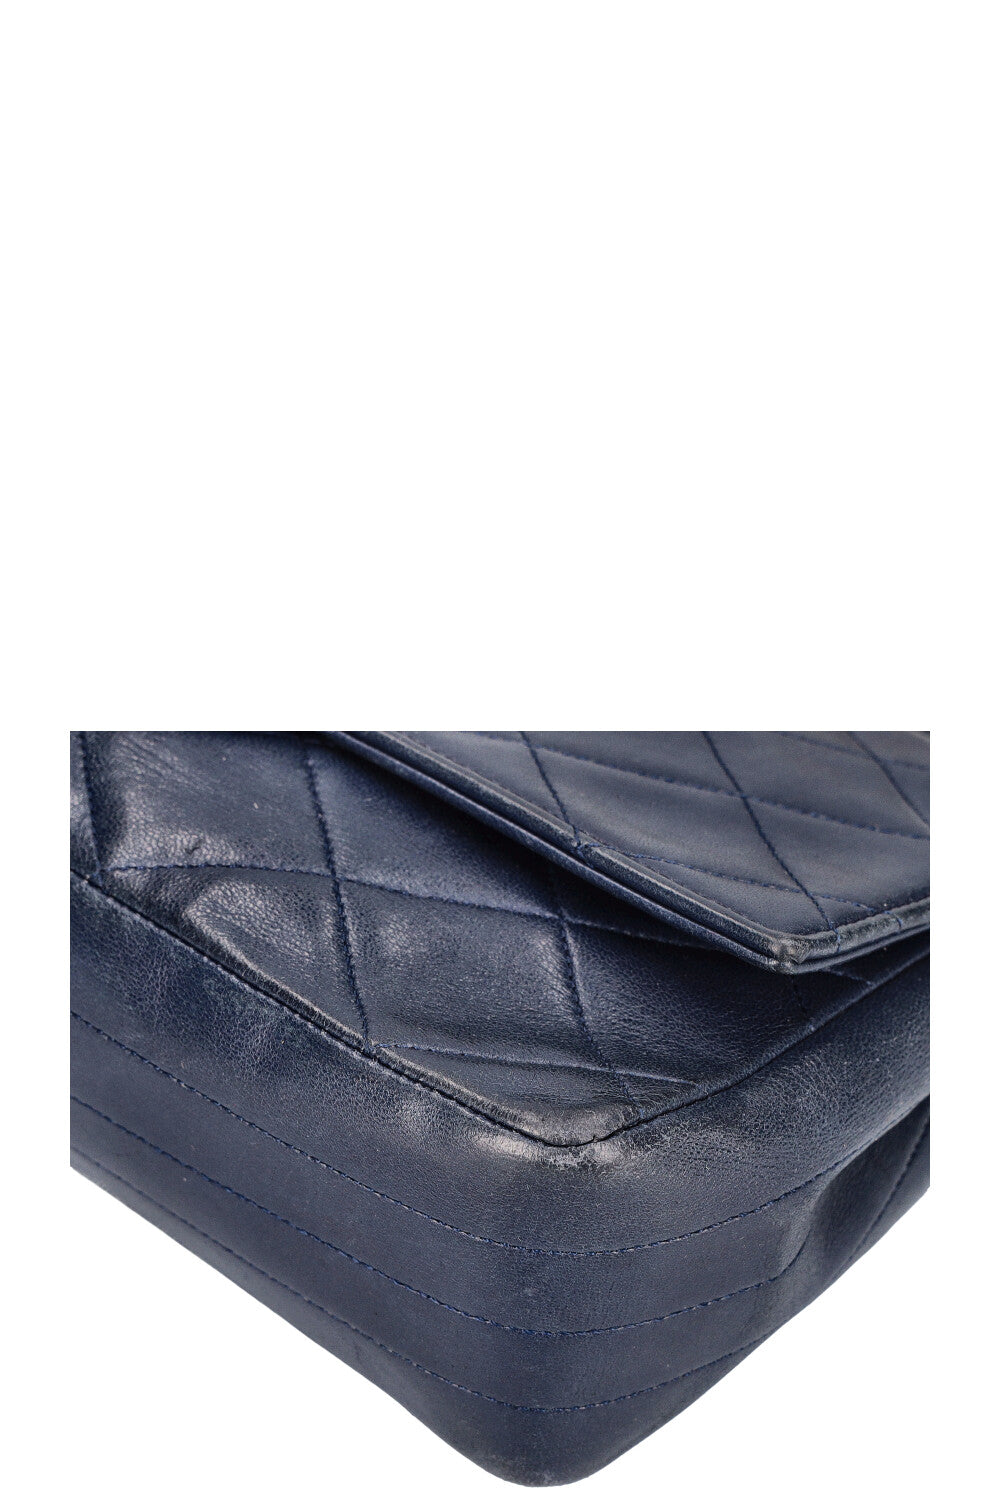 CHANEL Vintage Single Flap Bag Blue